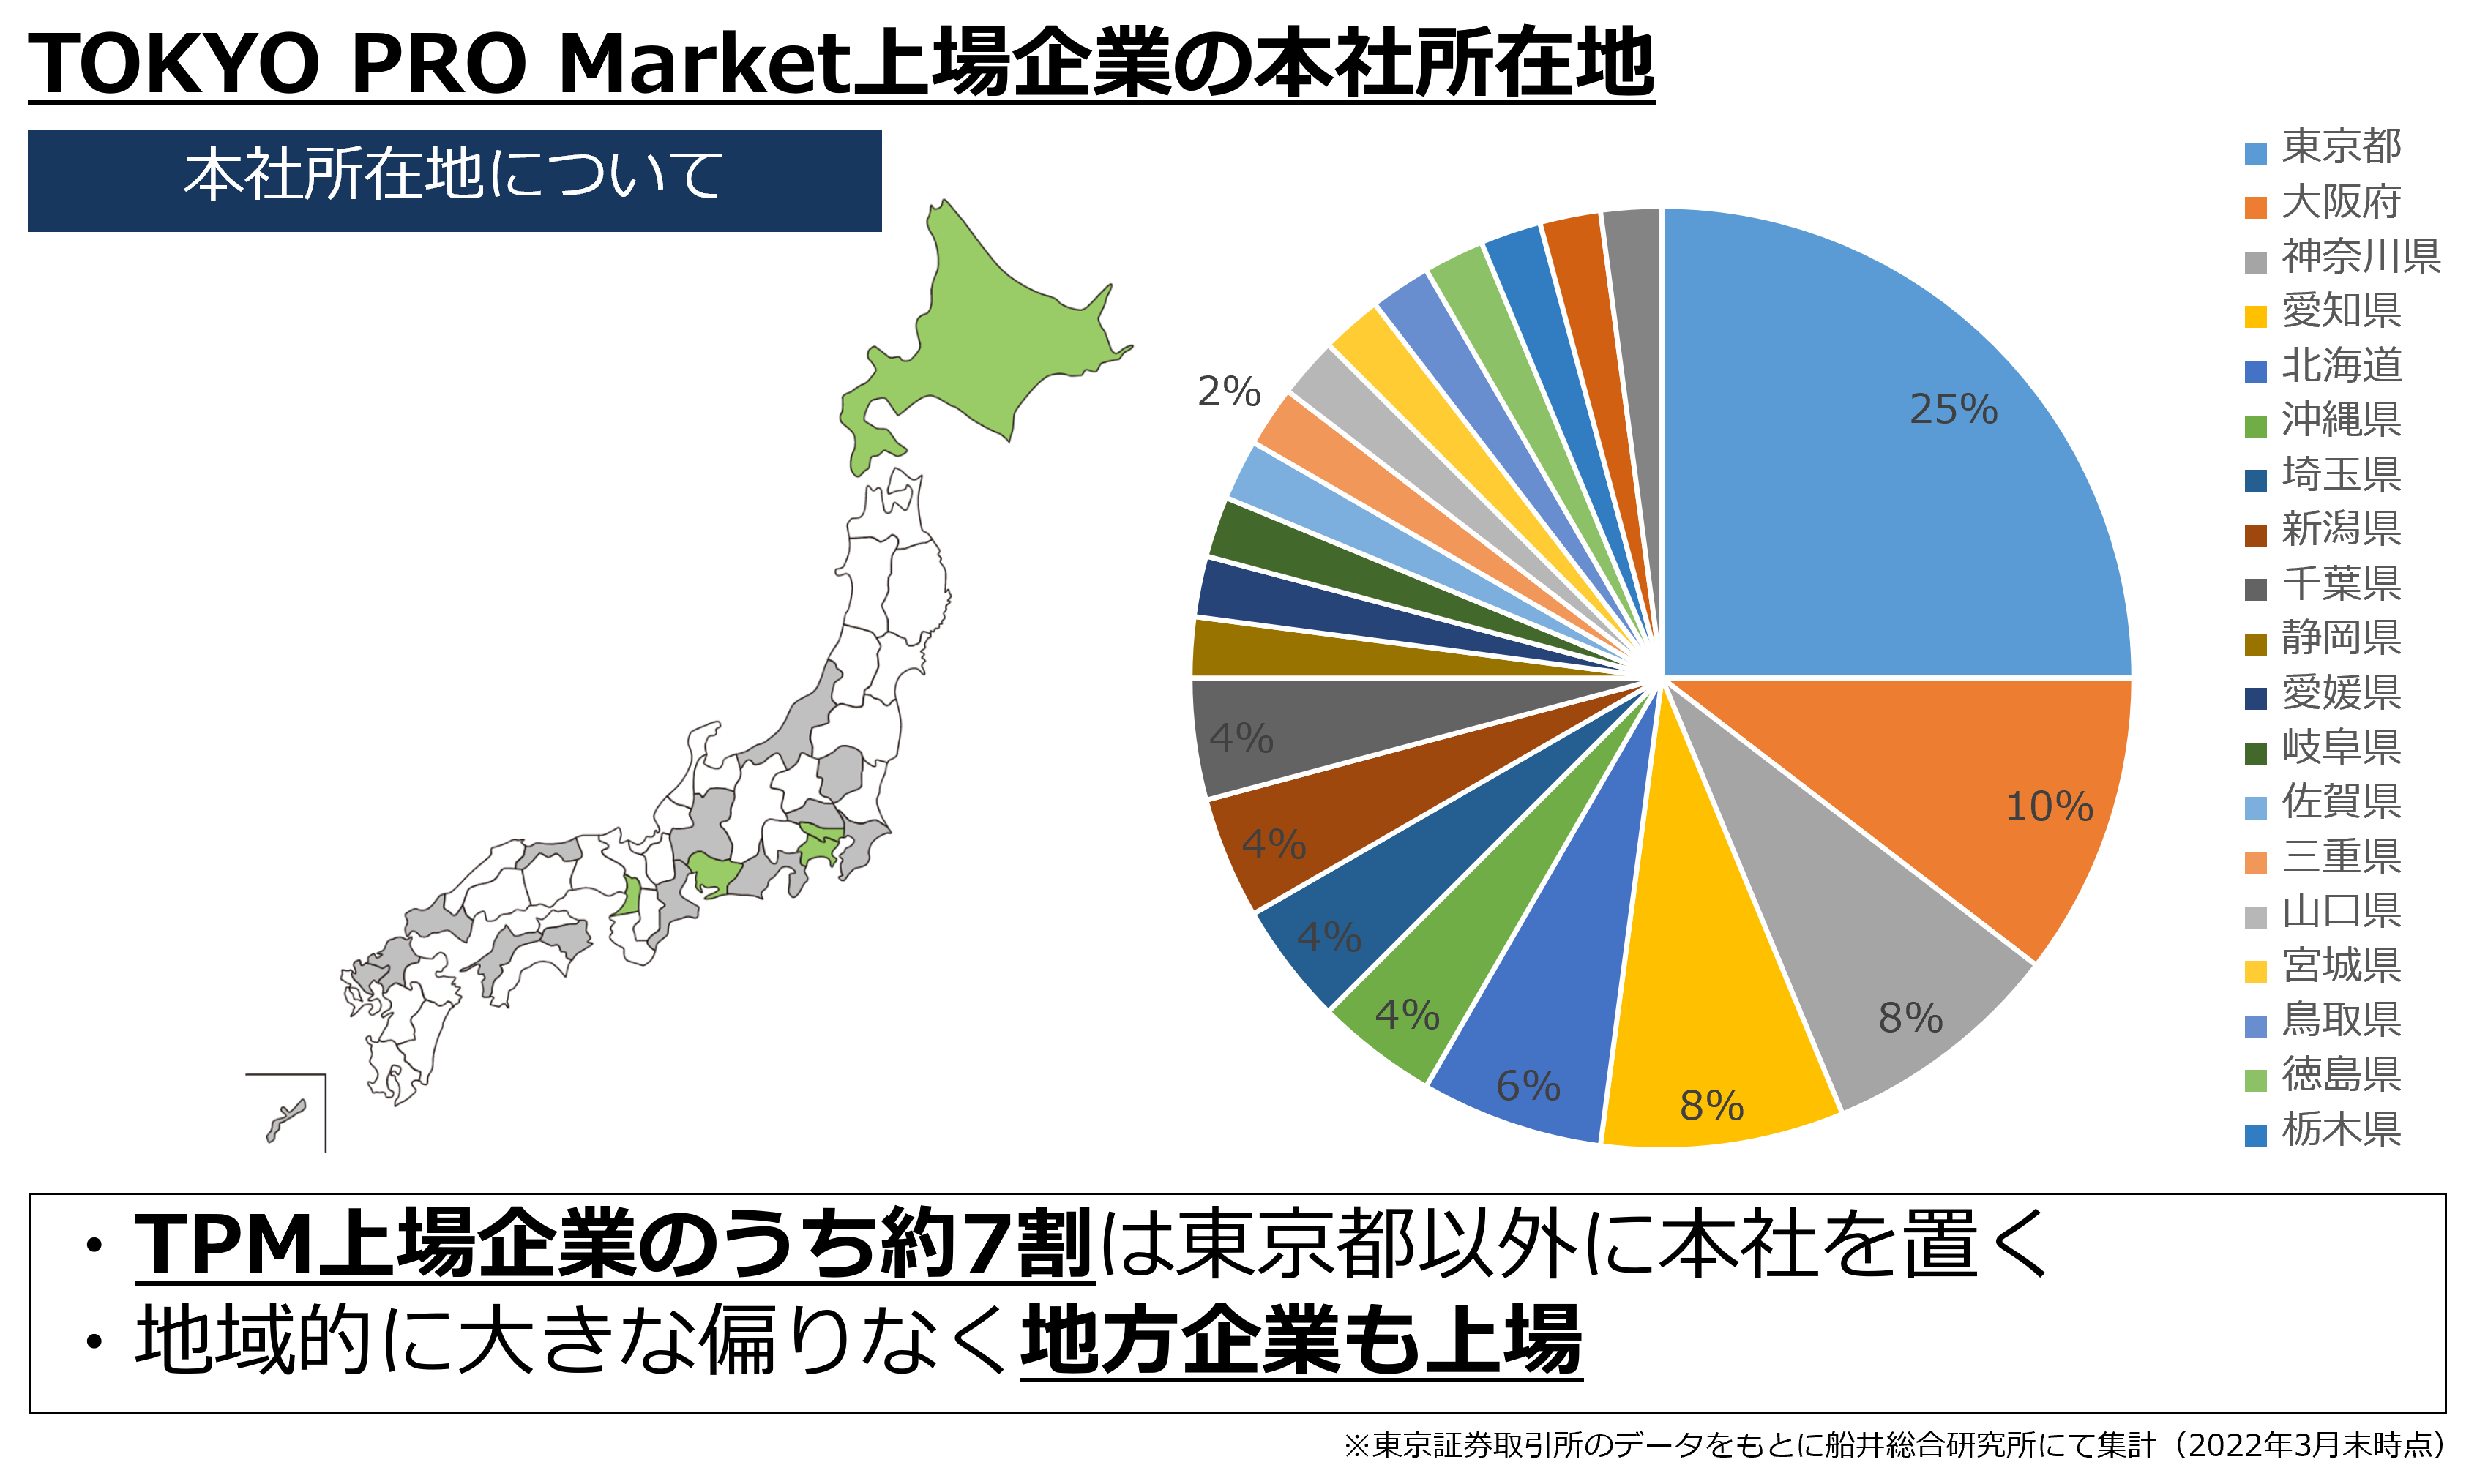 TOKYO PRO Market（東京プロマーケット）上場企業の本社所在地（東京証券取引所のデータを元に船井総研にて集計、2022年3月末時点）